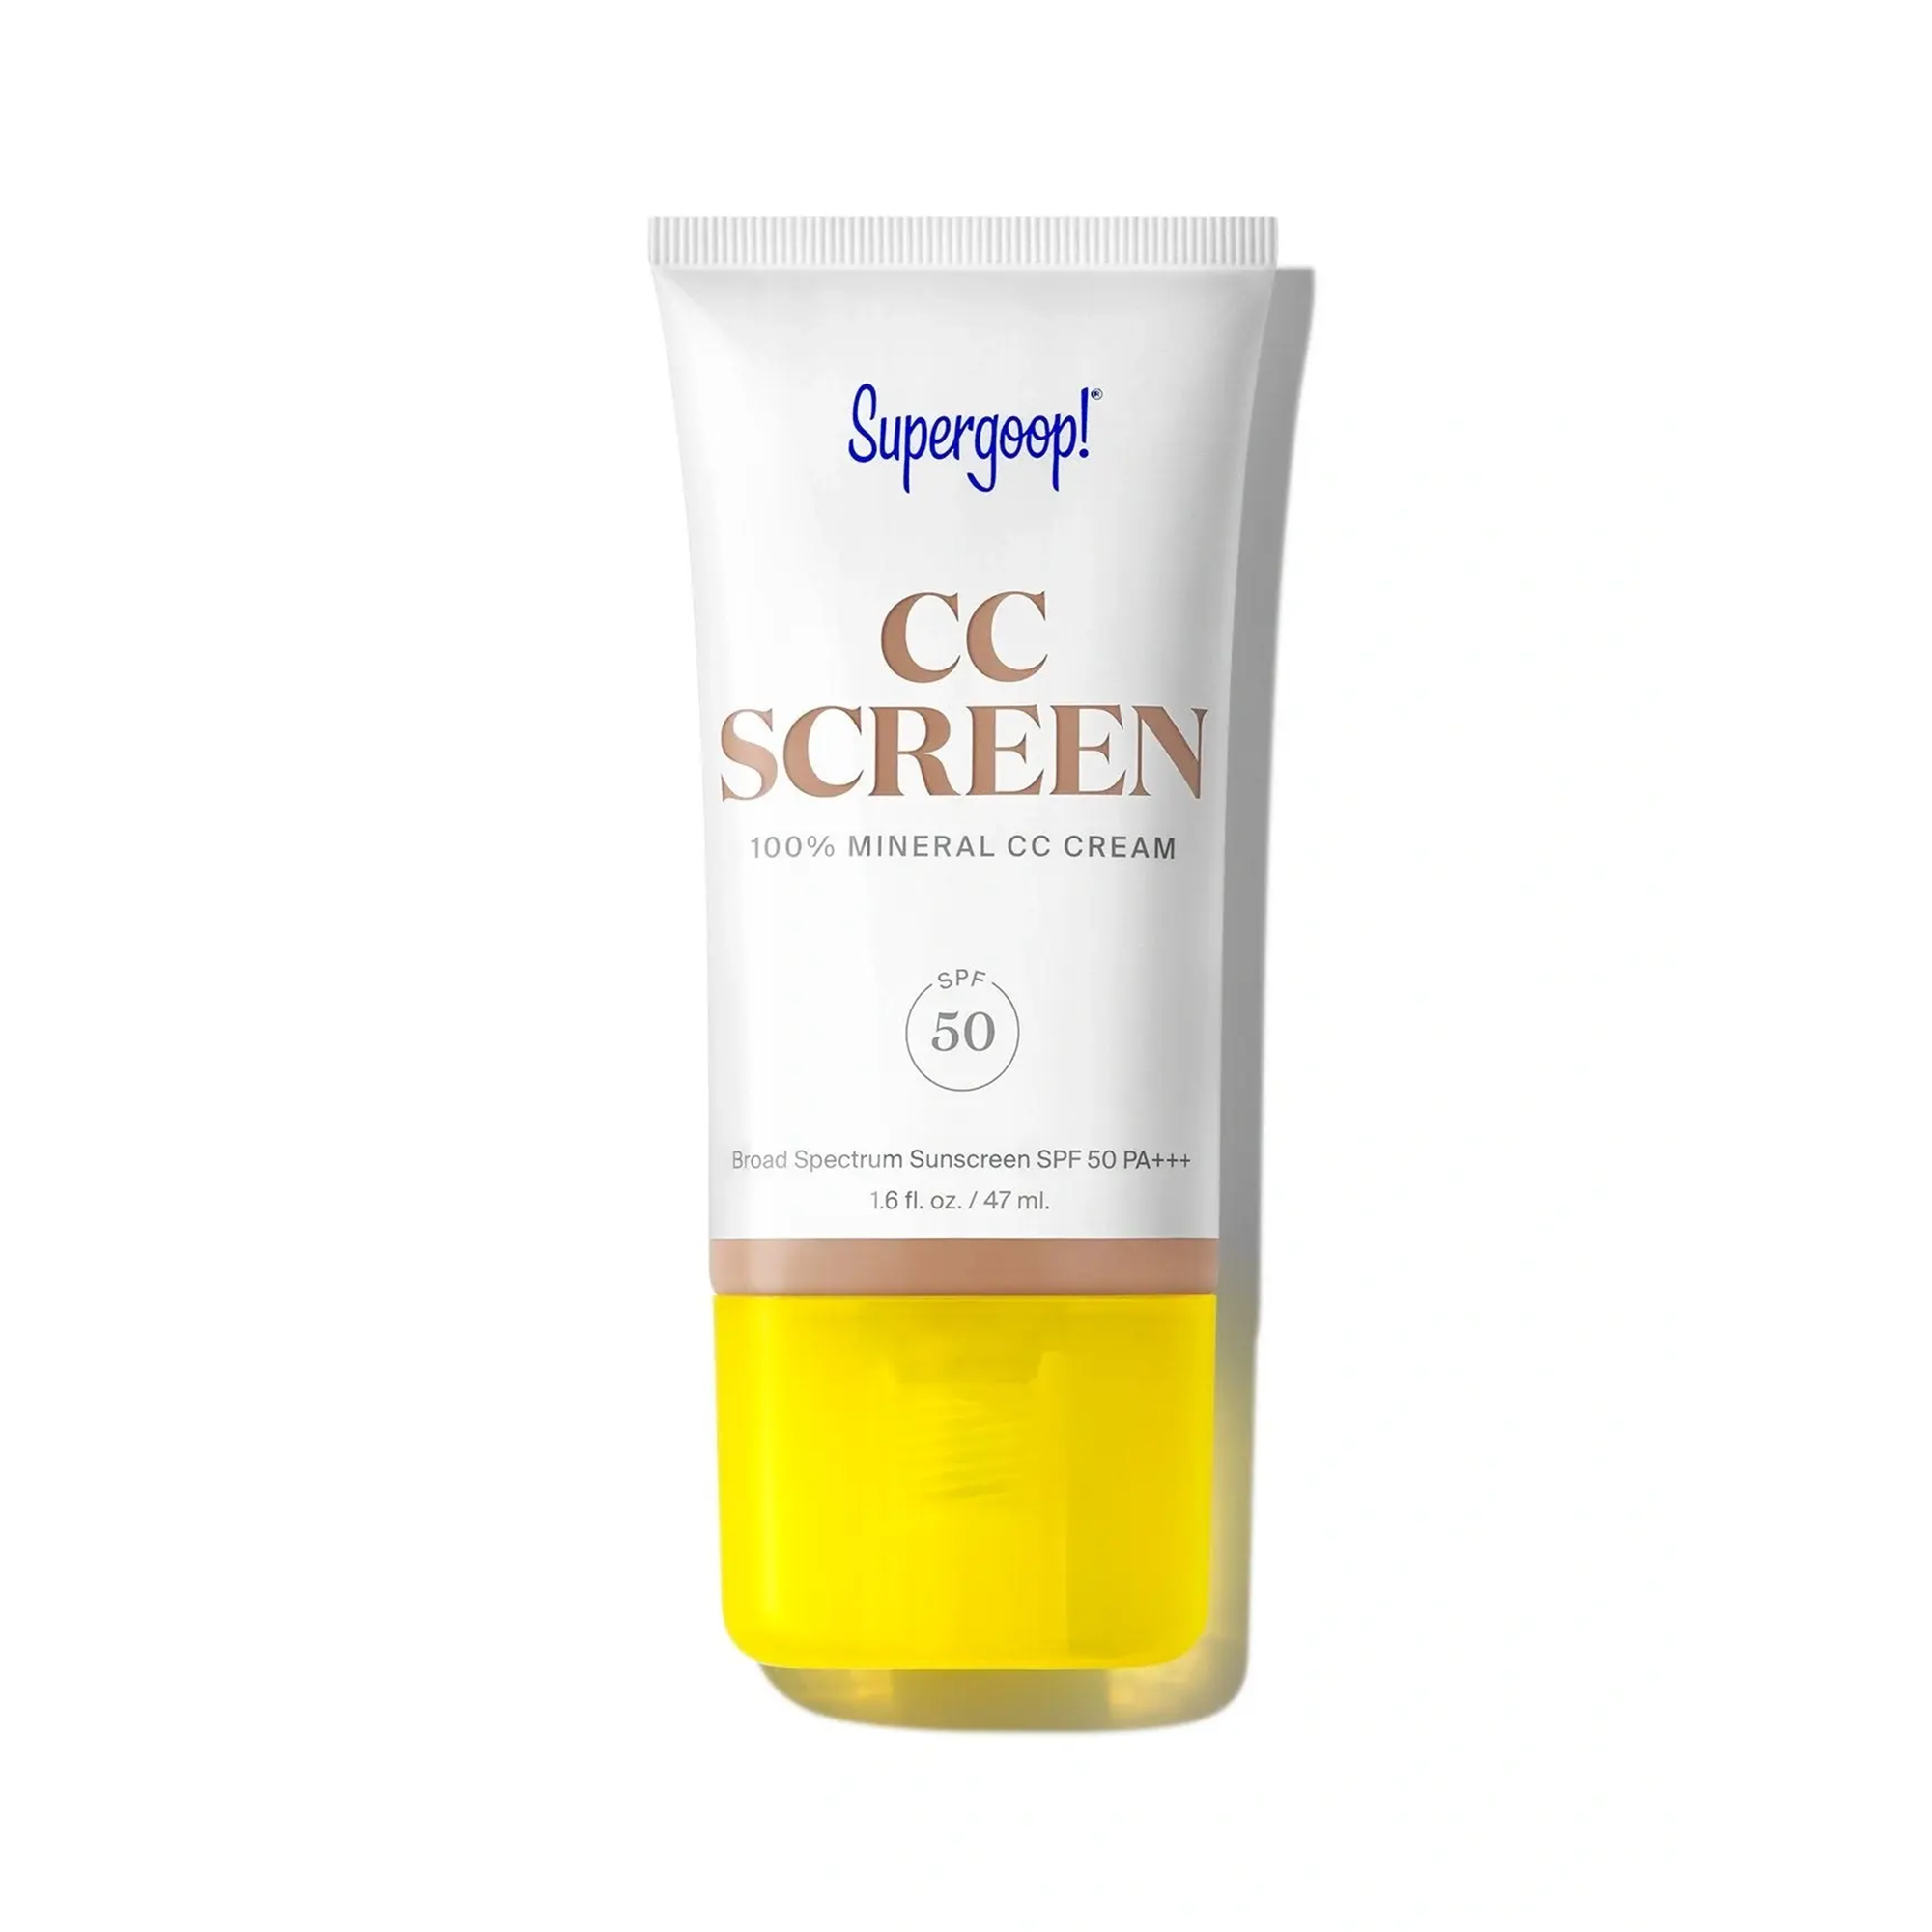 Supergoop! CC Screen 100% Mineral CC Cream SPF 50 / 336W